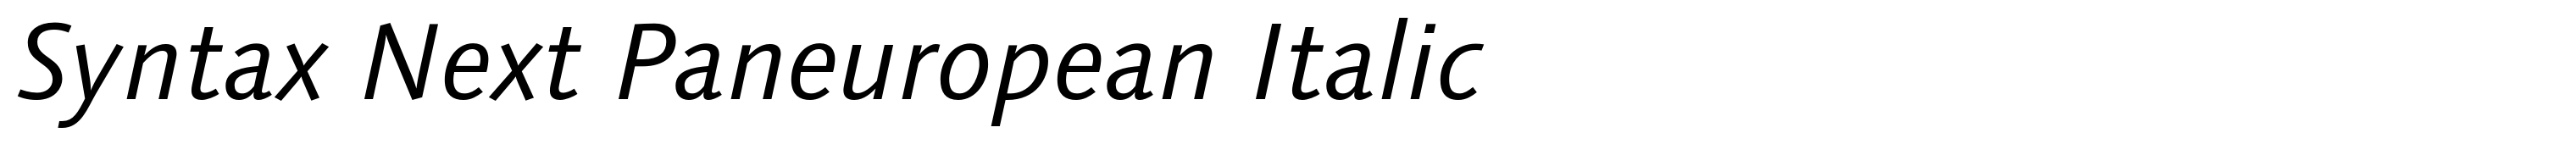 Syntax Next Paneuropean Italic